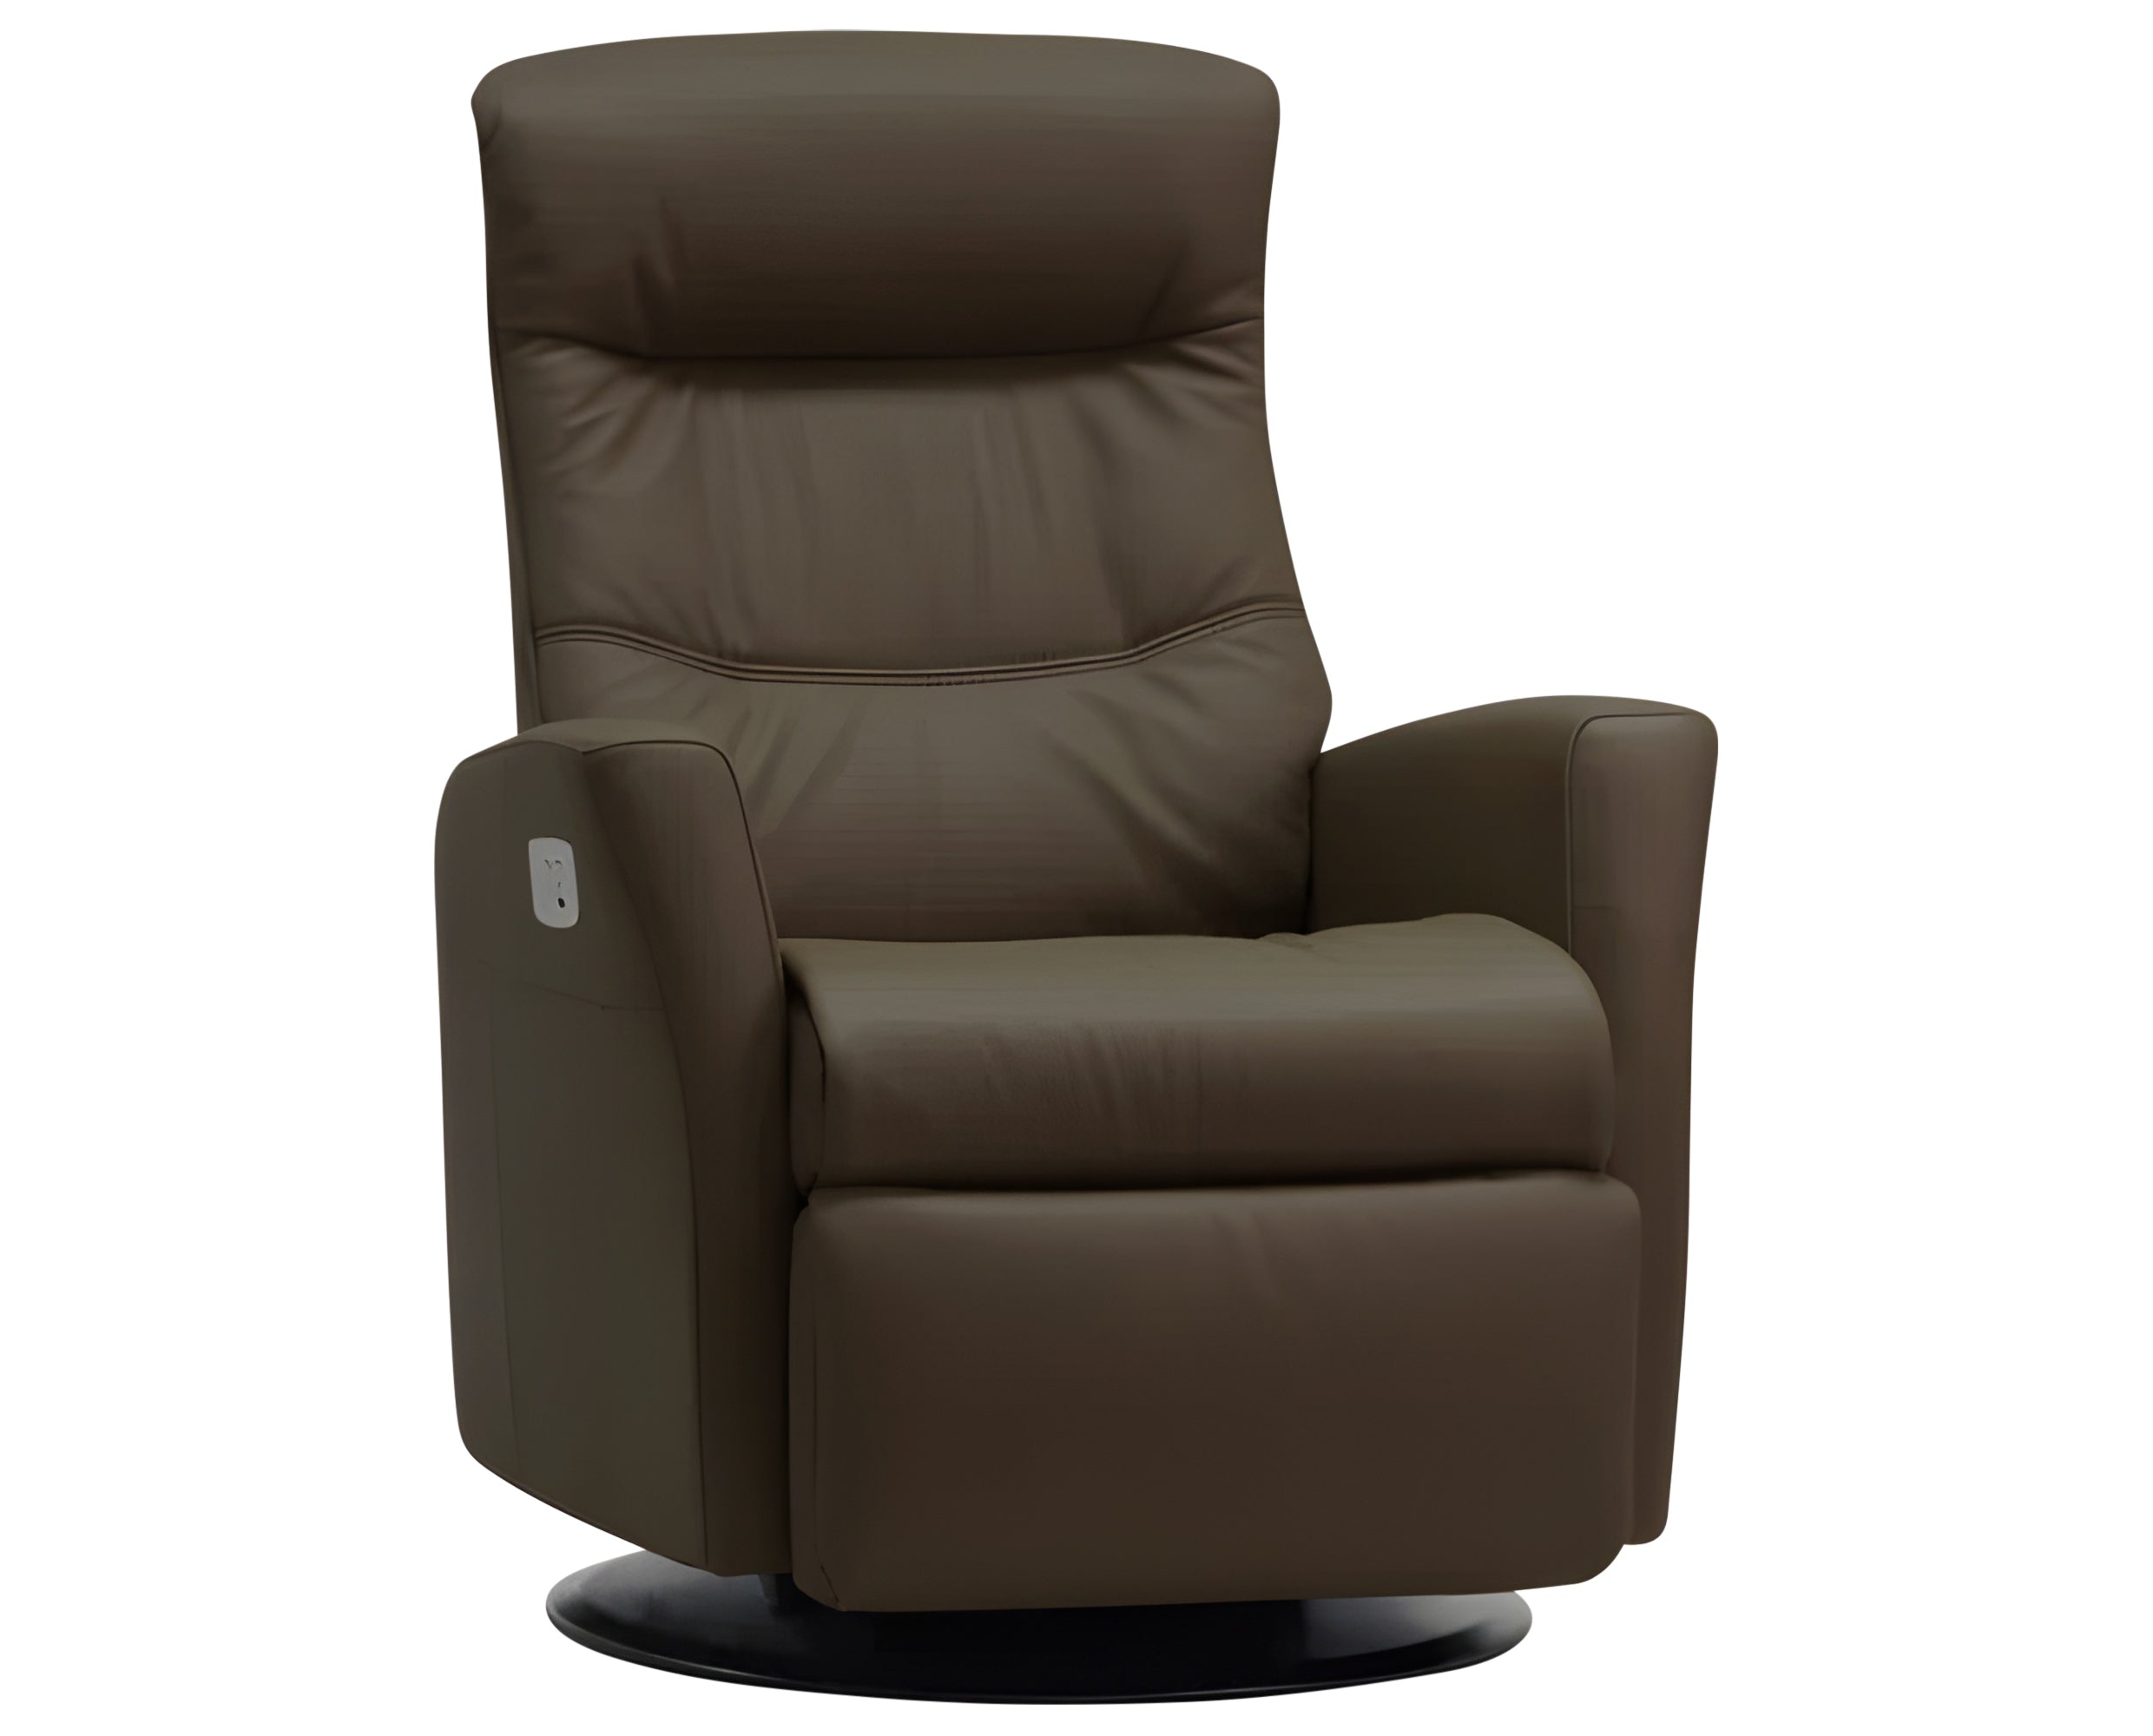 Trend Leather Smoke M | Norwegian Comfort Lord Recliner - Promo | Valley Ridge Furniture